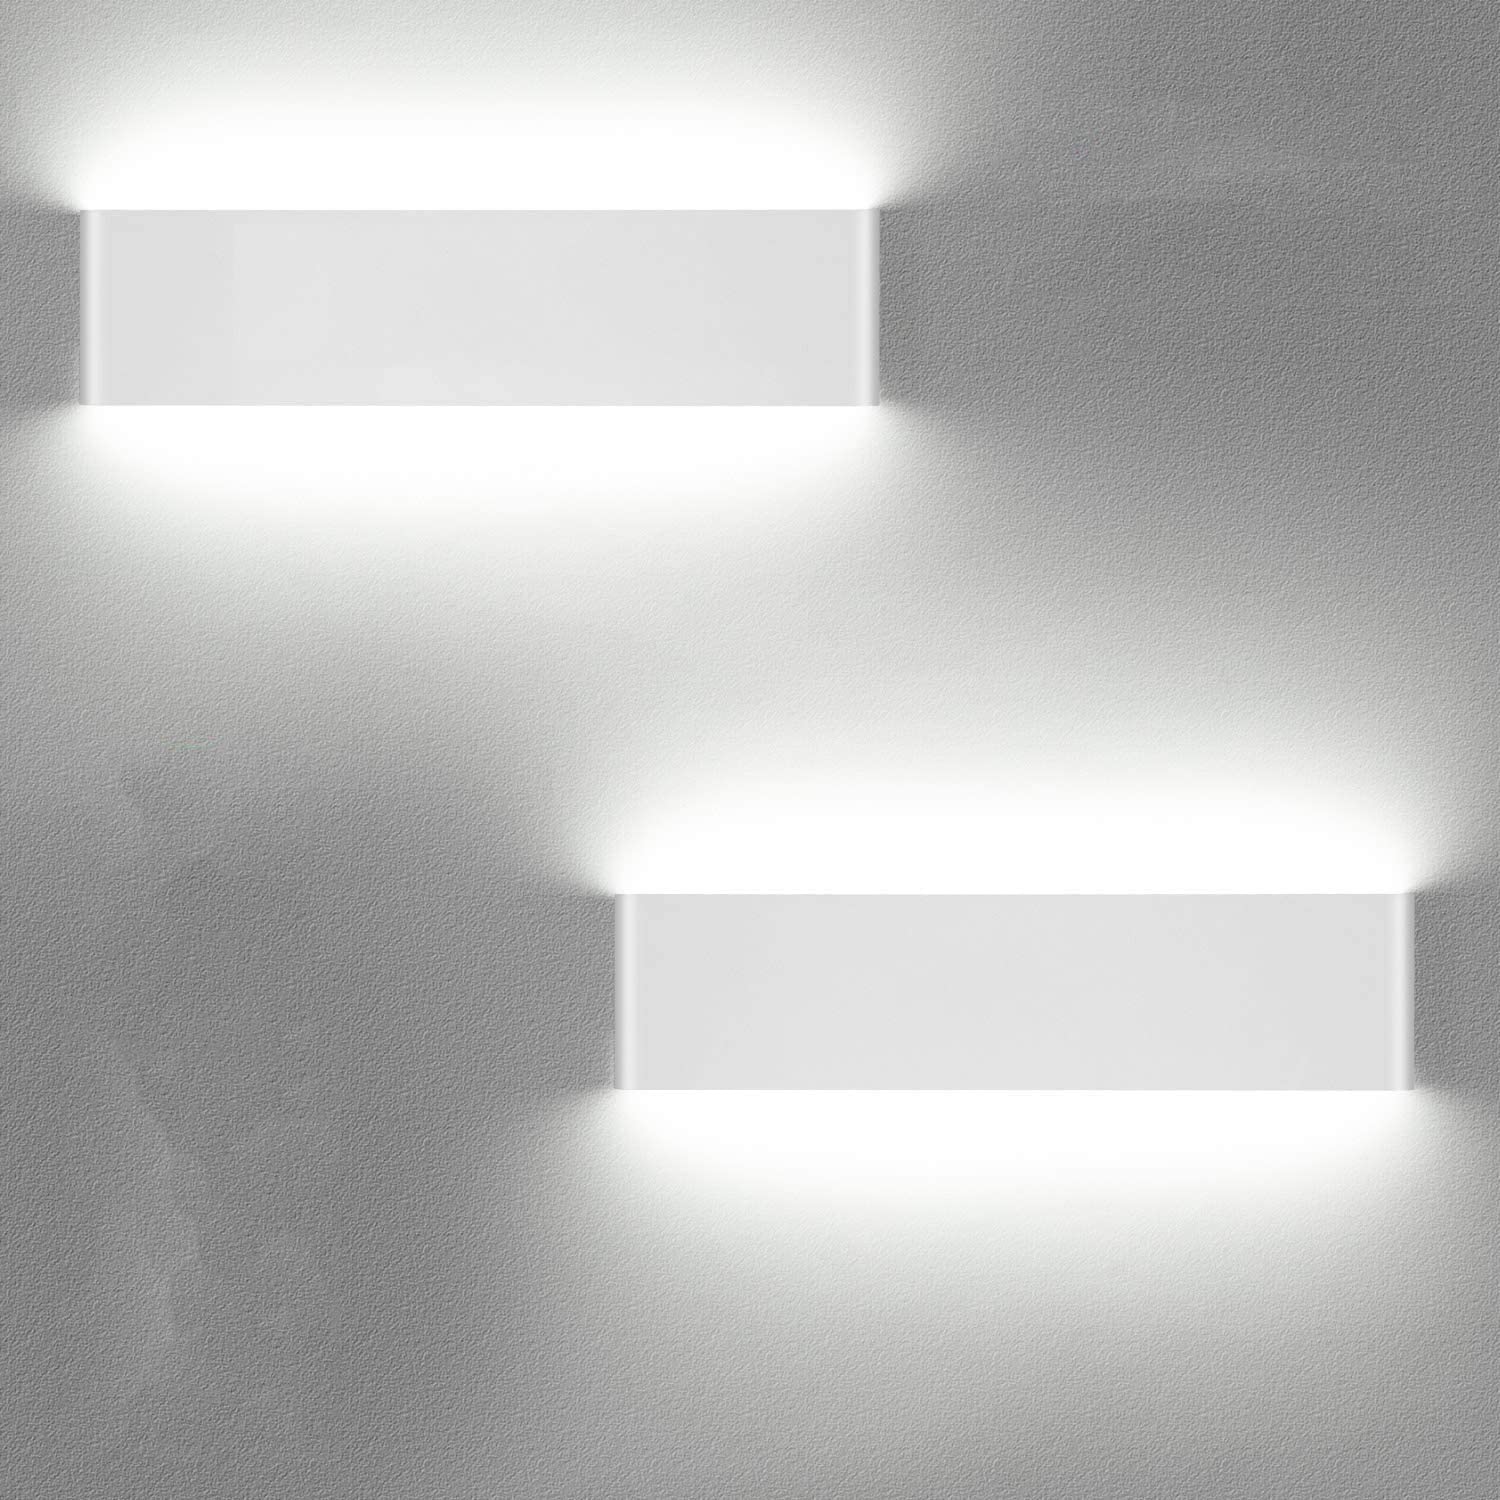 Moderno LED Lampara Aplique De Pared Interior Aluminio,Aplique